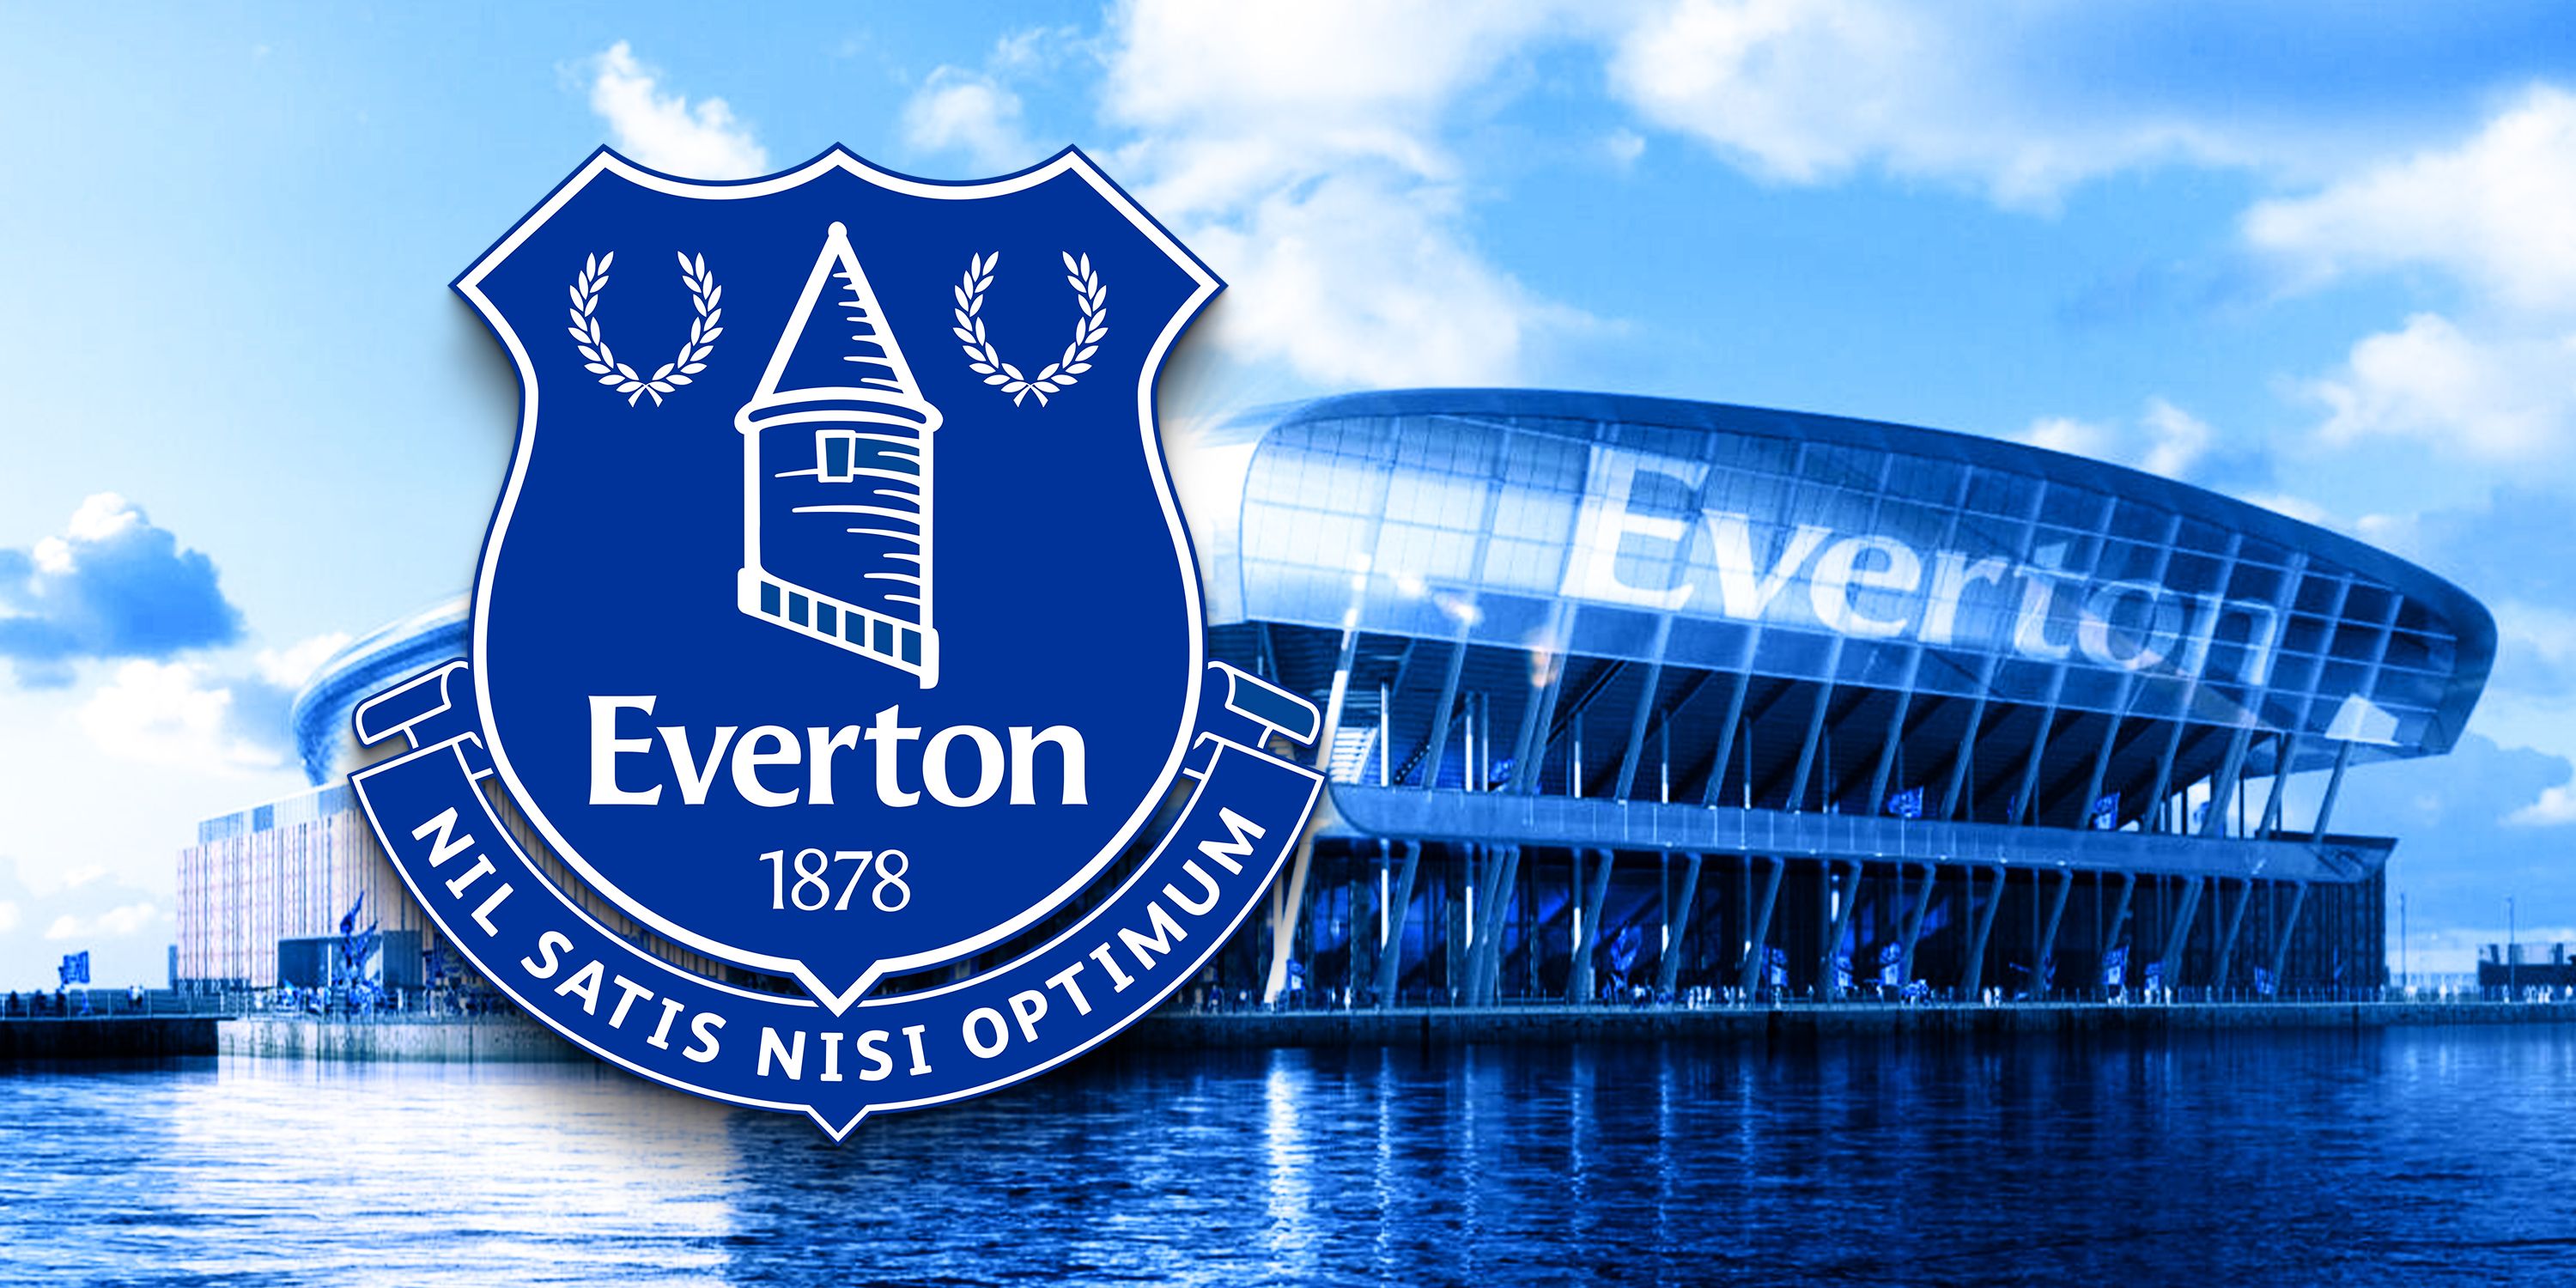 Everton's club crest and the new Bramley Moore Dock stadium.